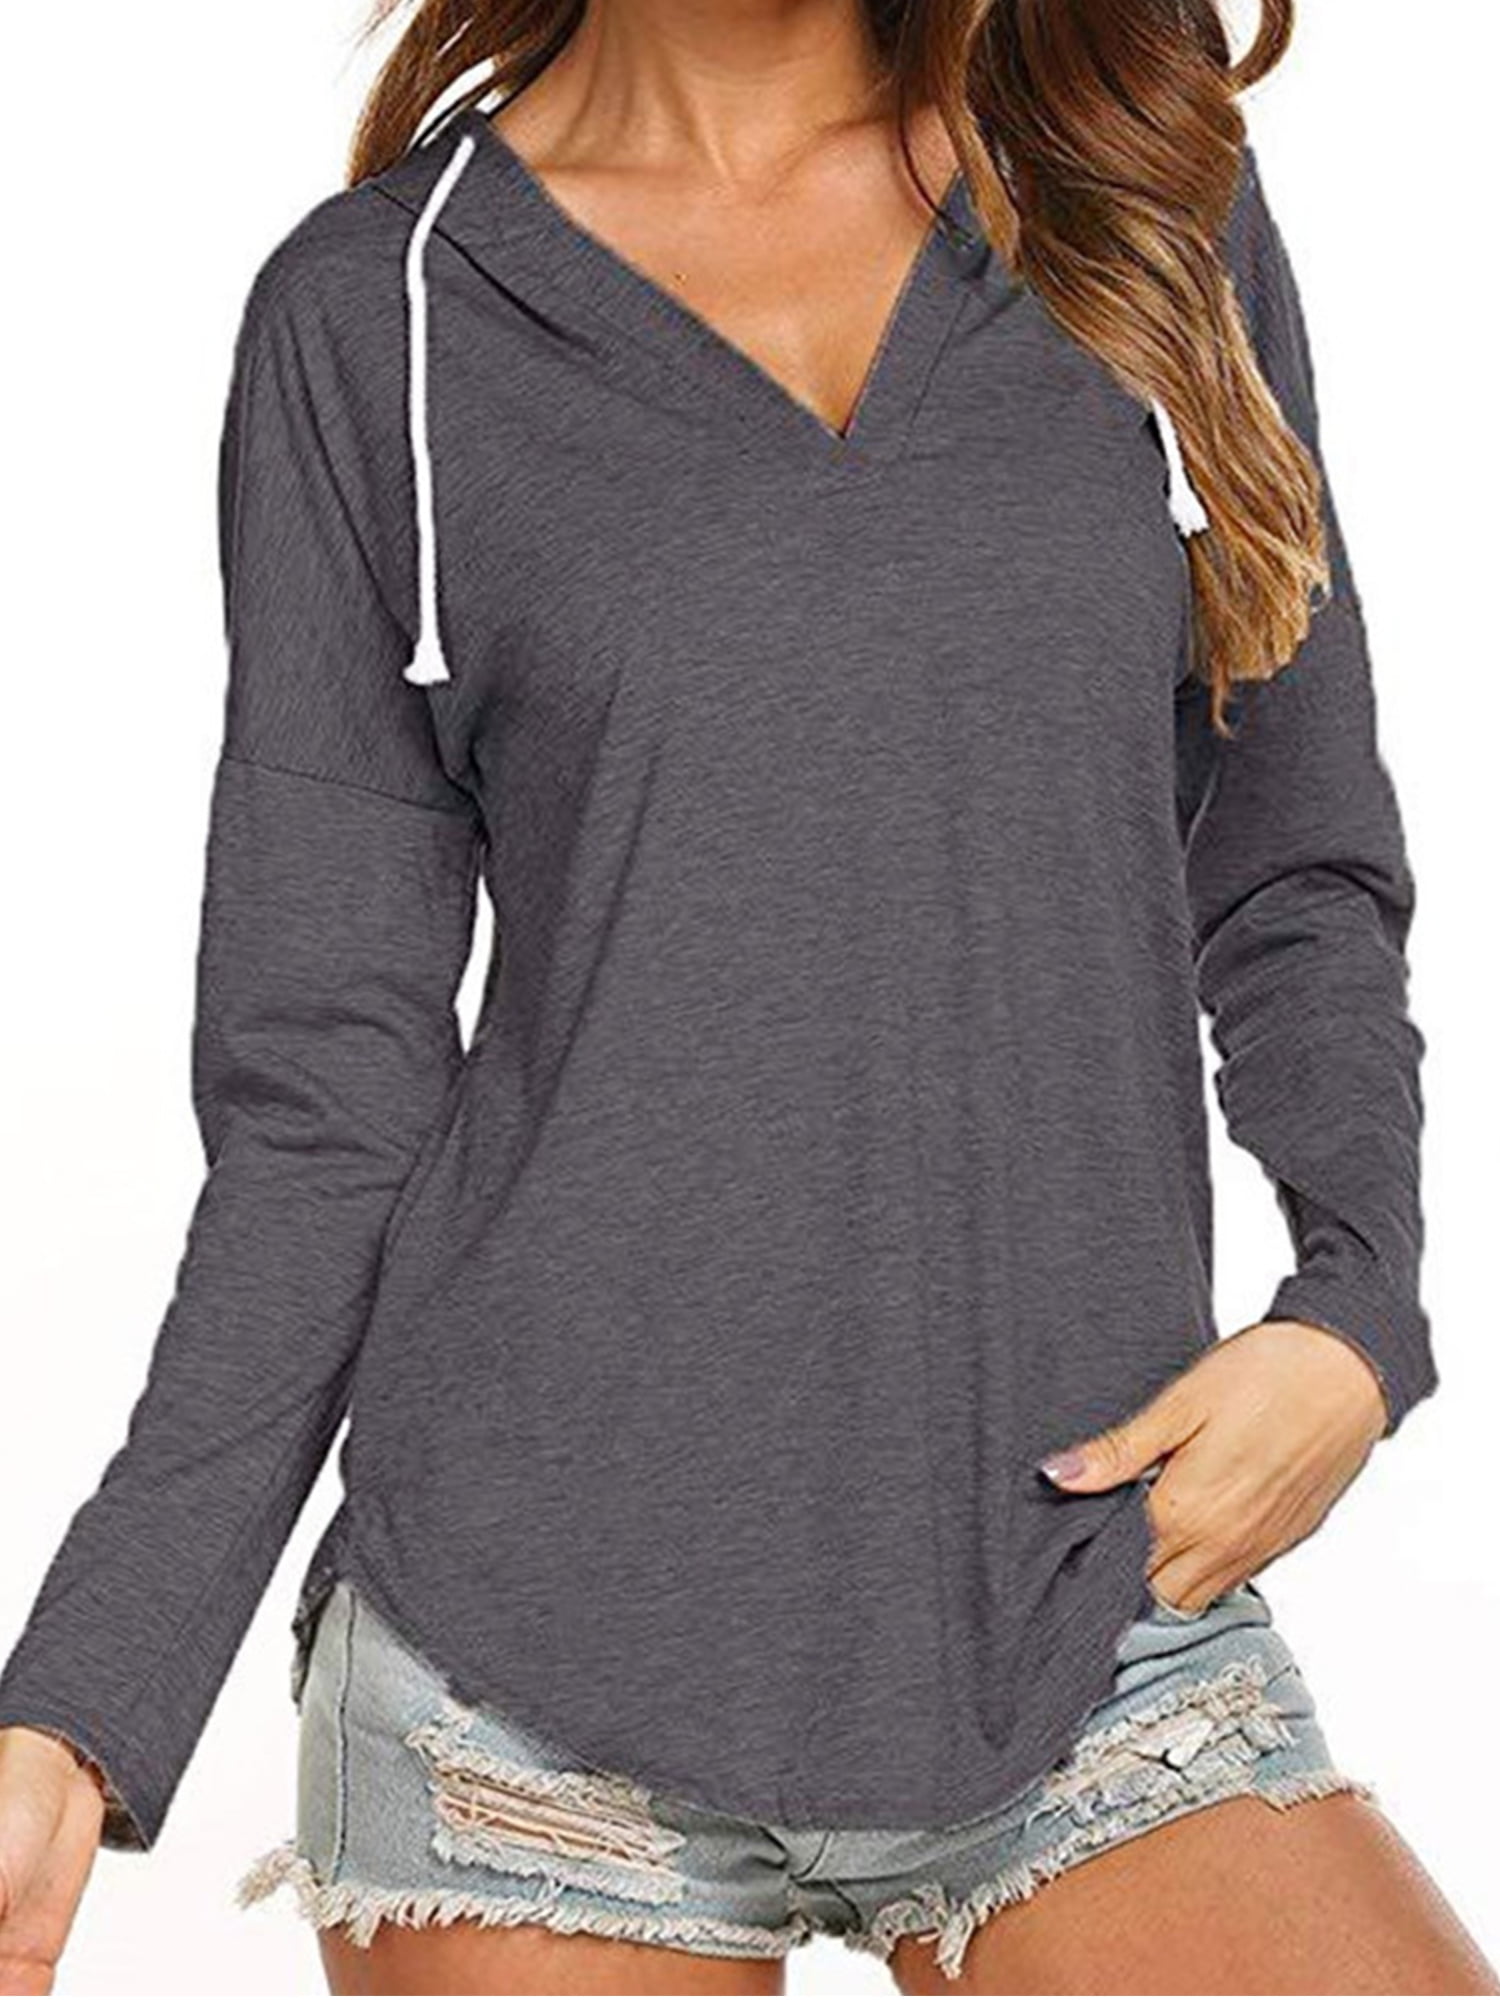 Women's Cotton Sweatshirt Solid Color Long Sleeve Tee Shirt Casual V Neck Pullovers Oversized Tops Trendy Sweatshirts 